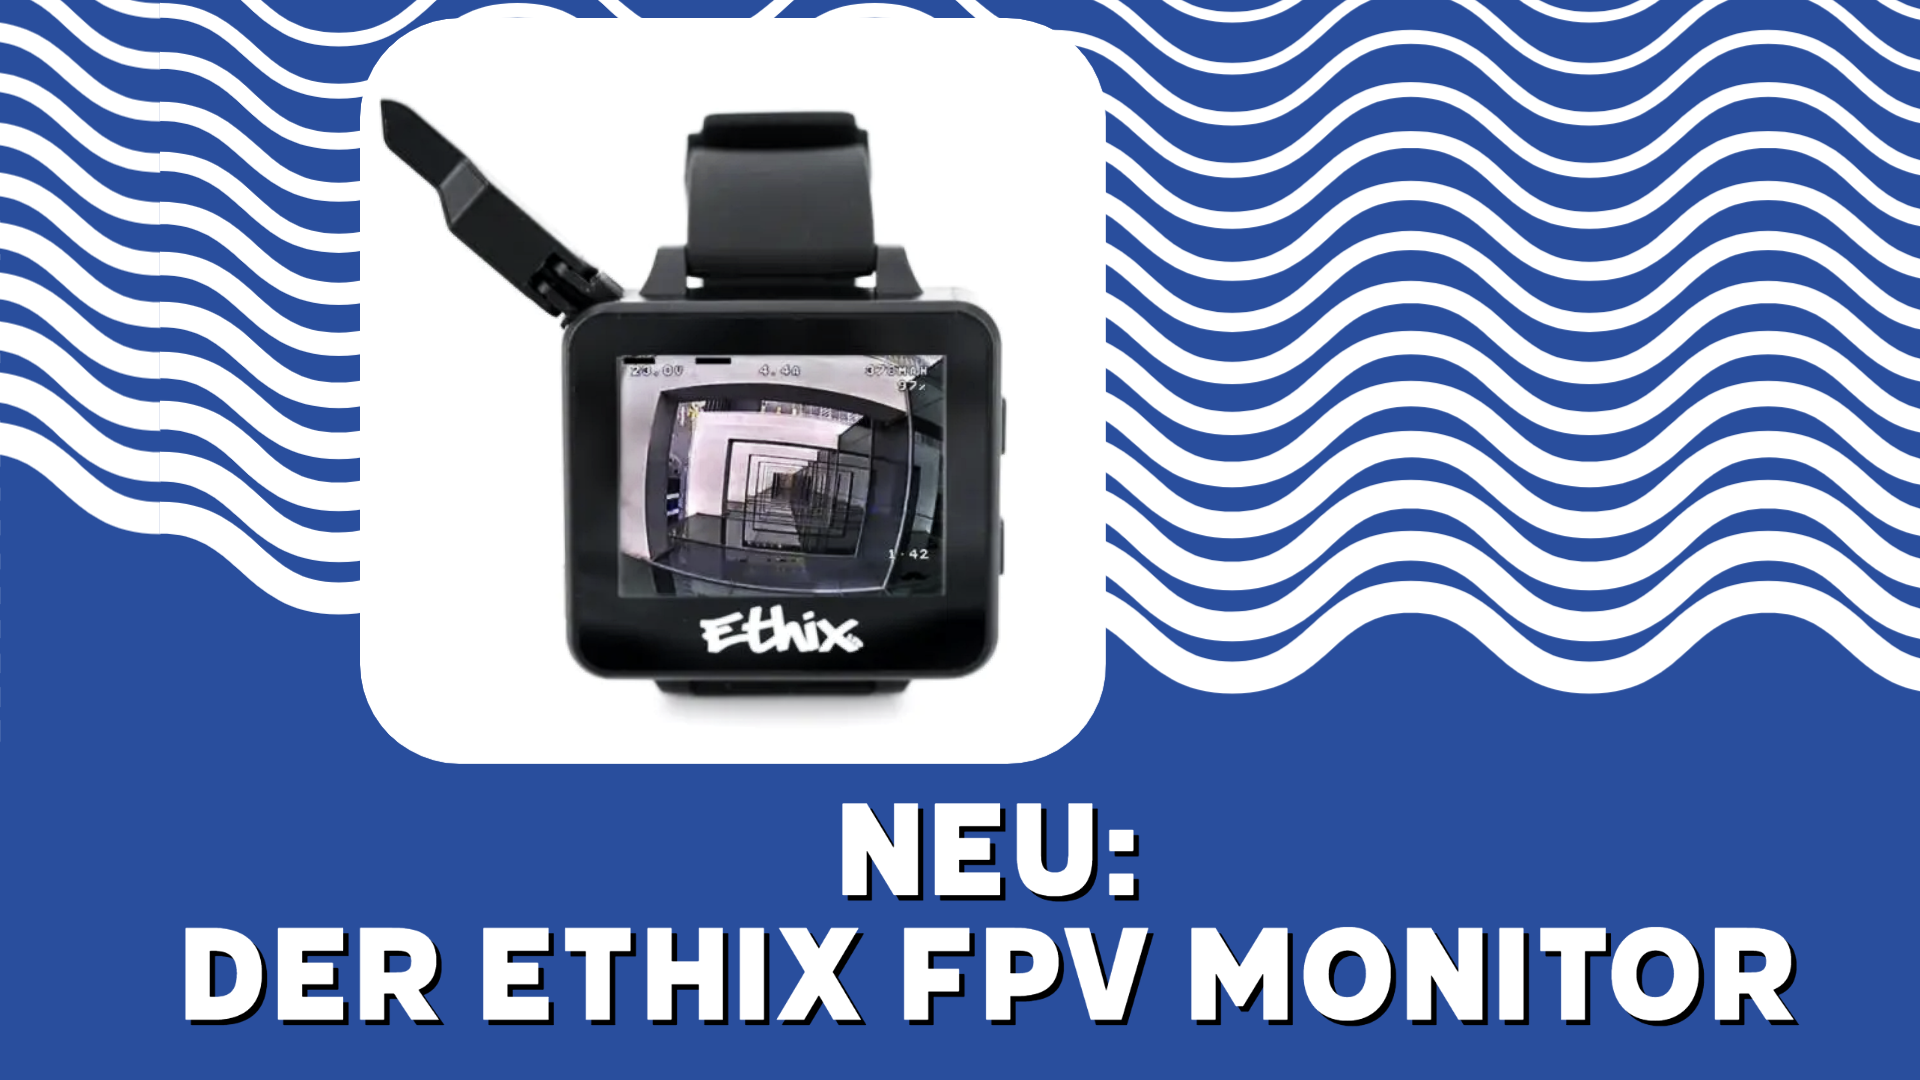 Ethix FPV Uhr / Monitor